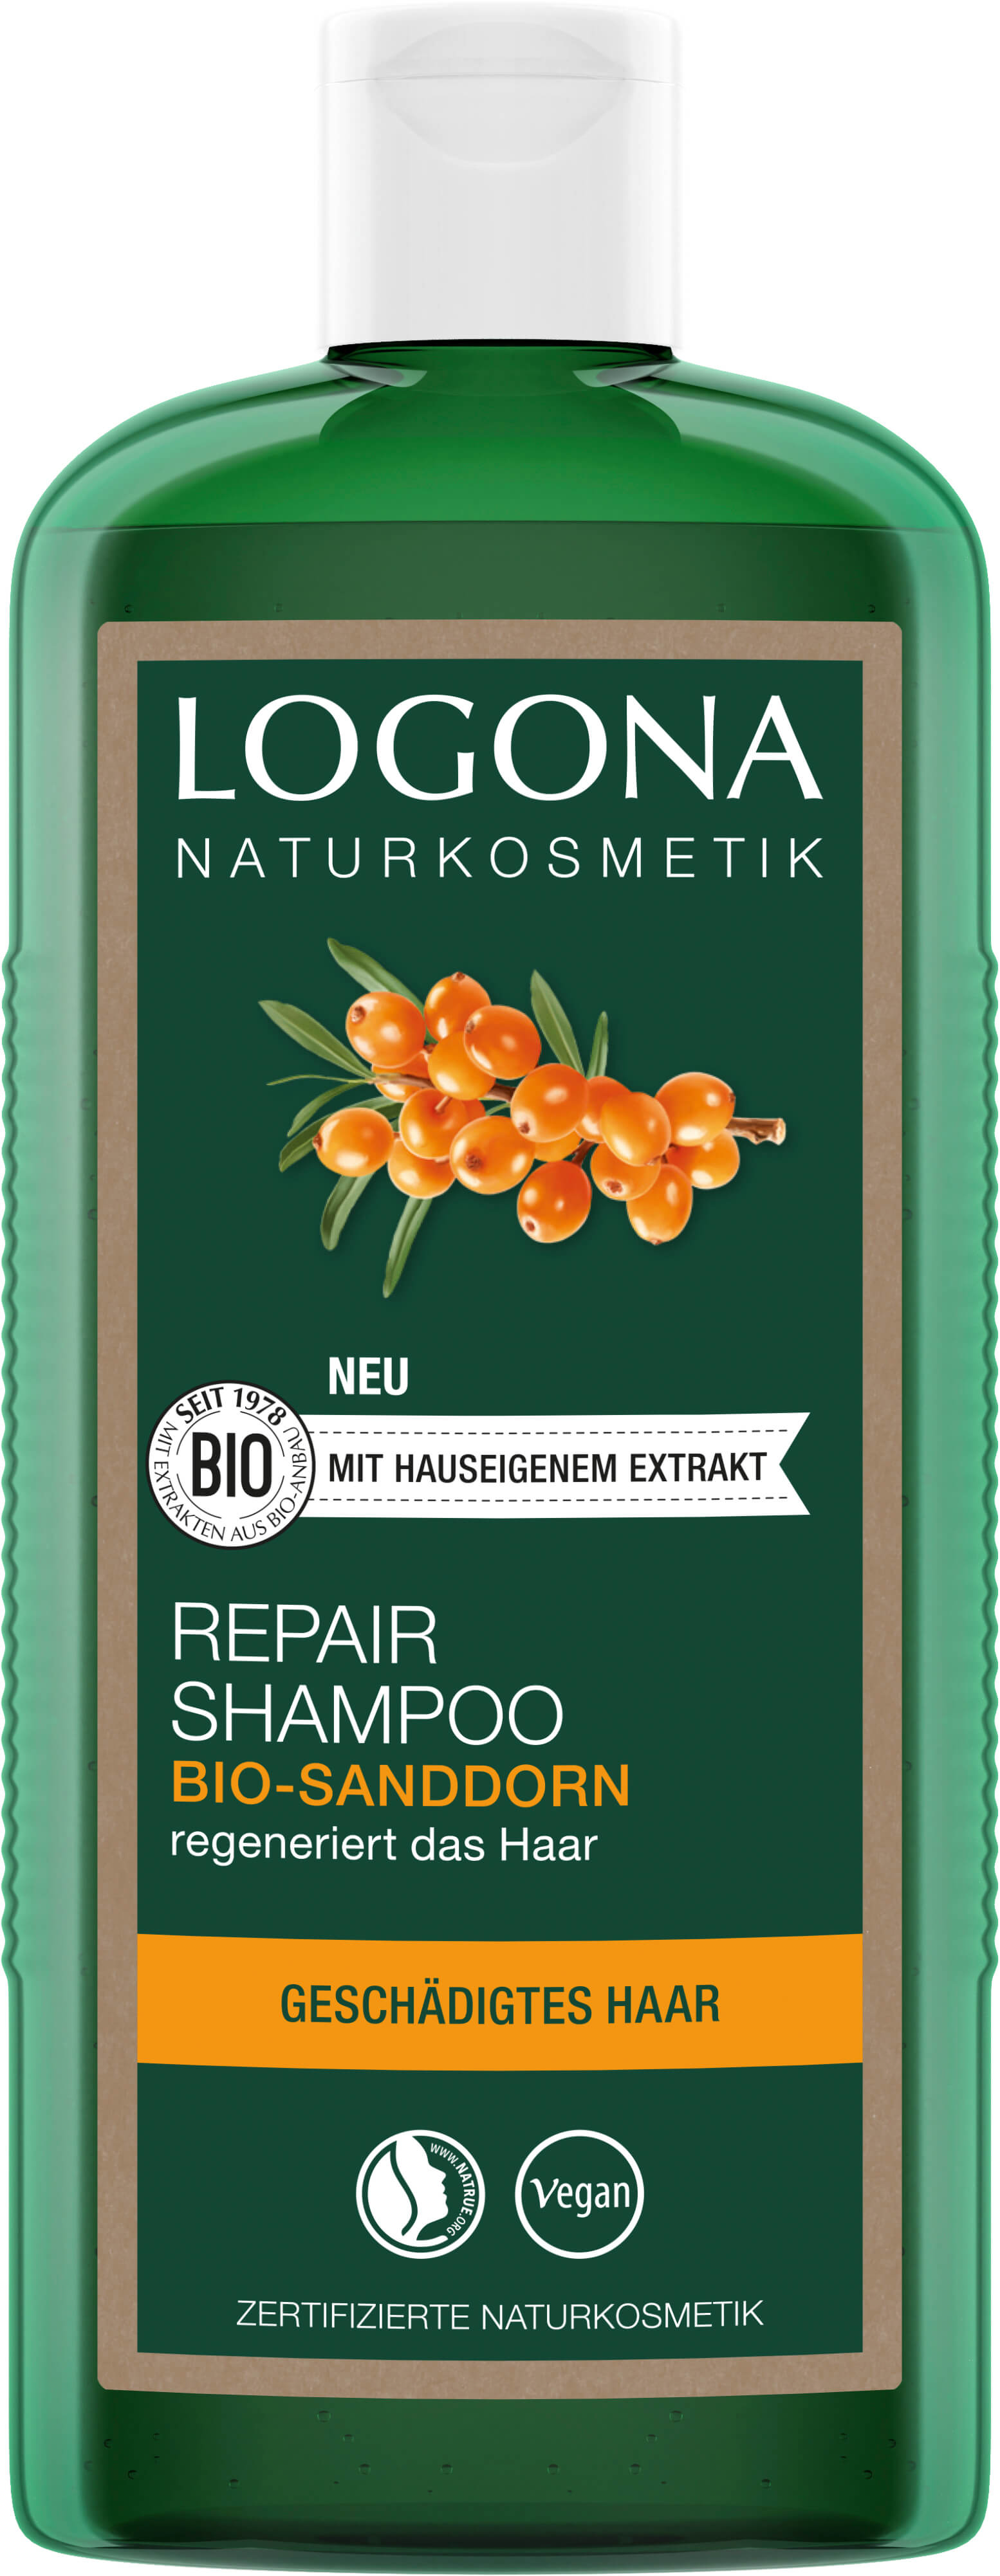 Repair & Pflege Shampoo Bio-Sanddorn | LOGONA Naturkosmetik